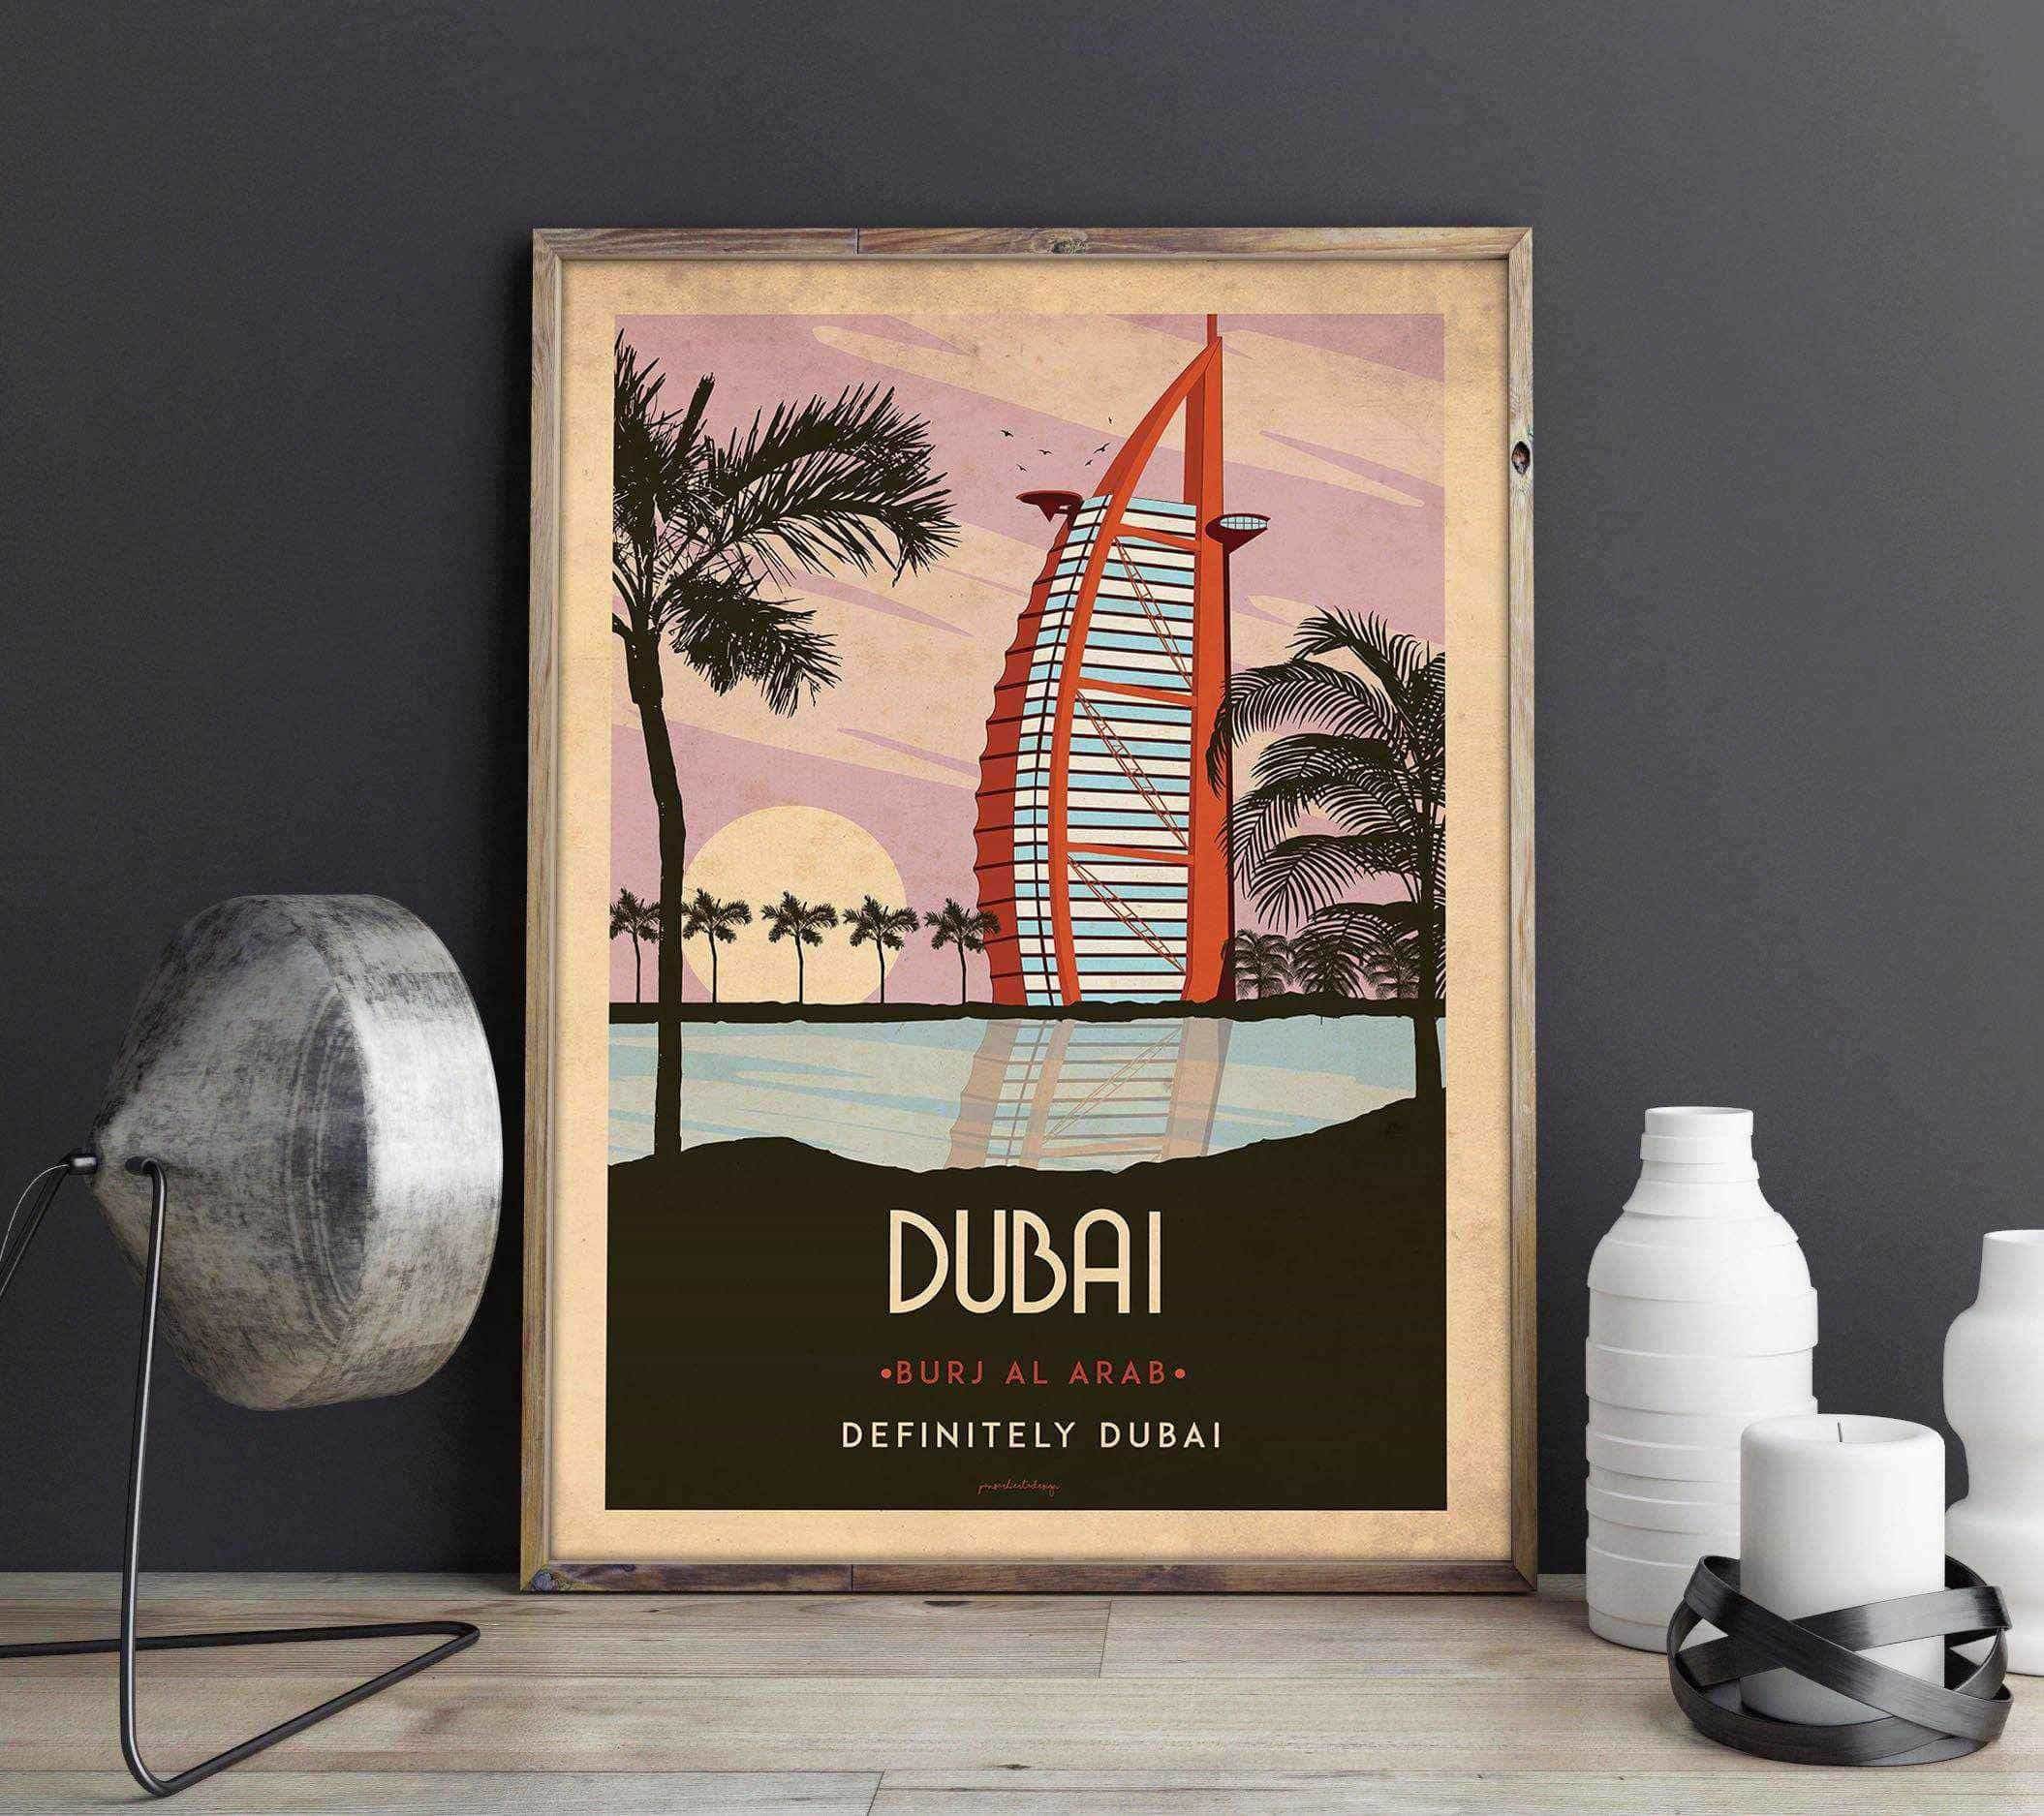 Art deco - Dubai - World collection Posters, affischer, tavlor Pansarhierta